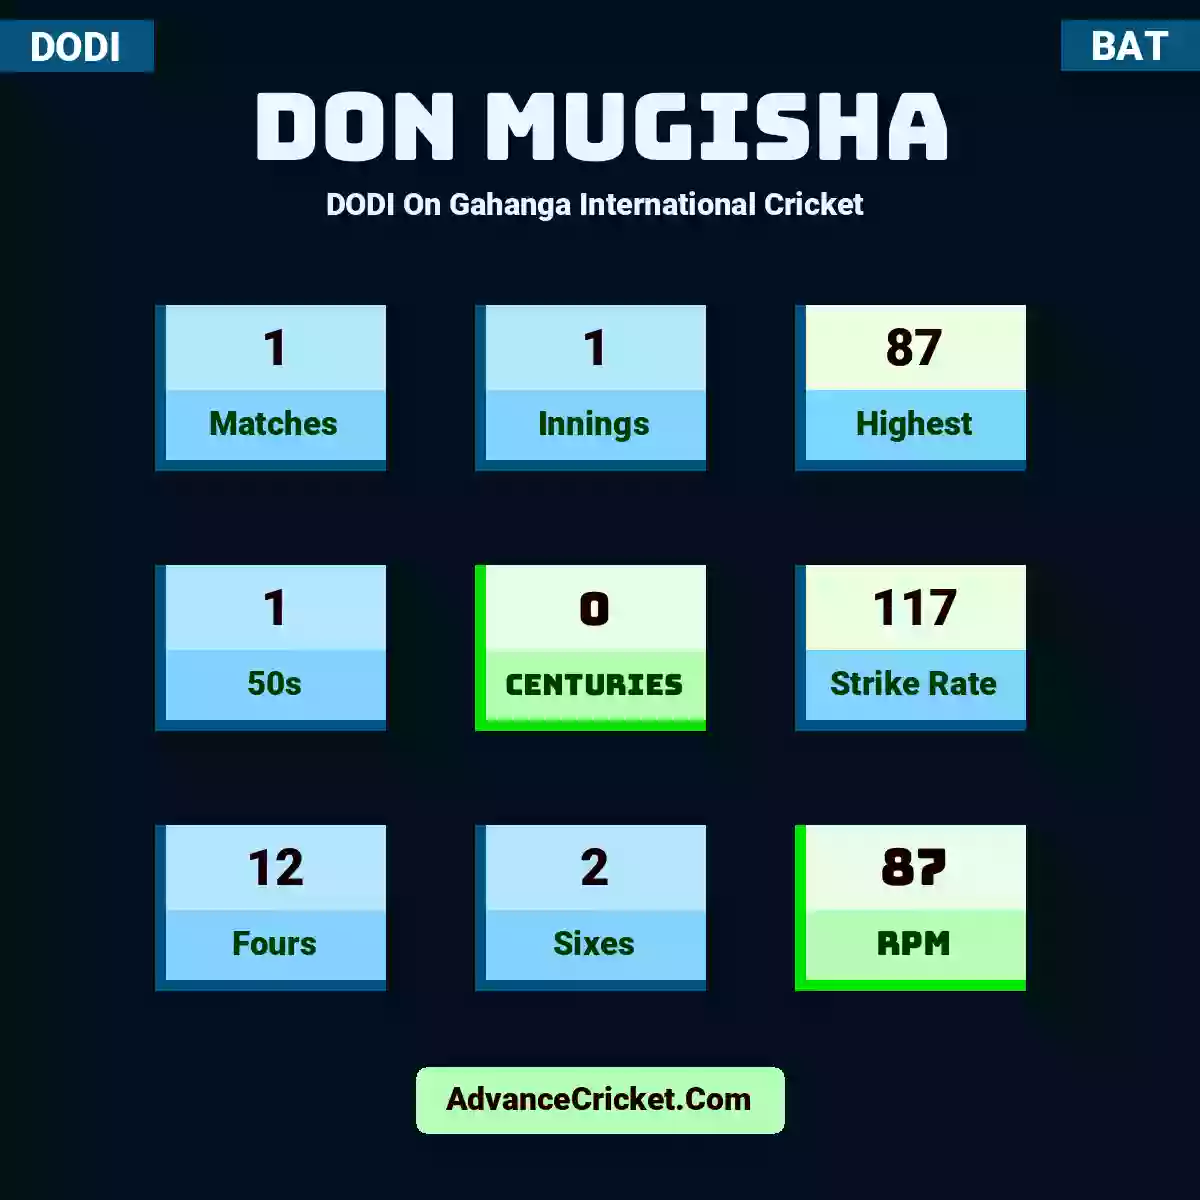 Don Mugisha DODI  On Gahanga International Cricket , Don Mugisha played 1 matches, scored 87 runs as highest, 1 half-centuries, and 0 centuries, with a strike rate of 117. D.Mugisha hit 12 fours and 2 sixes, with an RPM of 87.